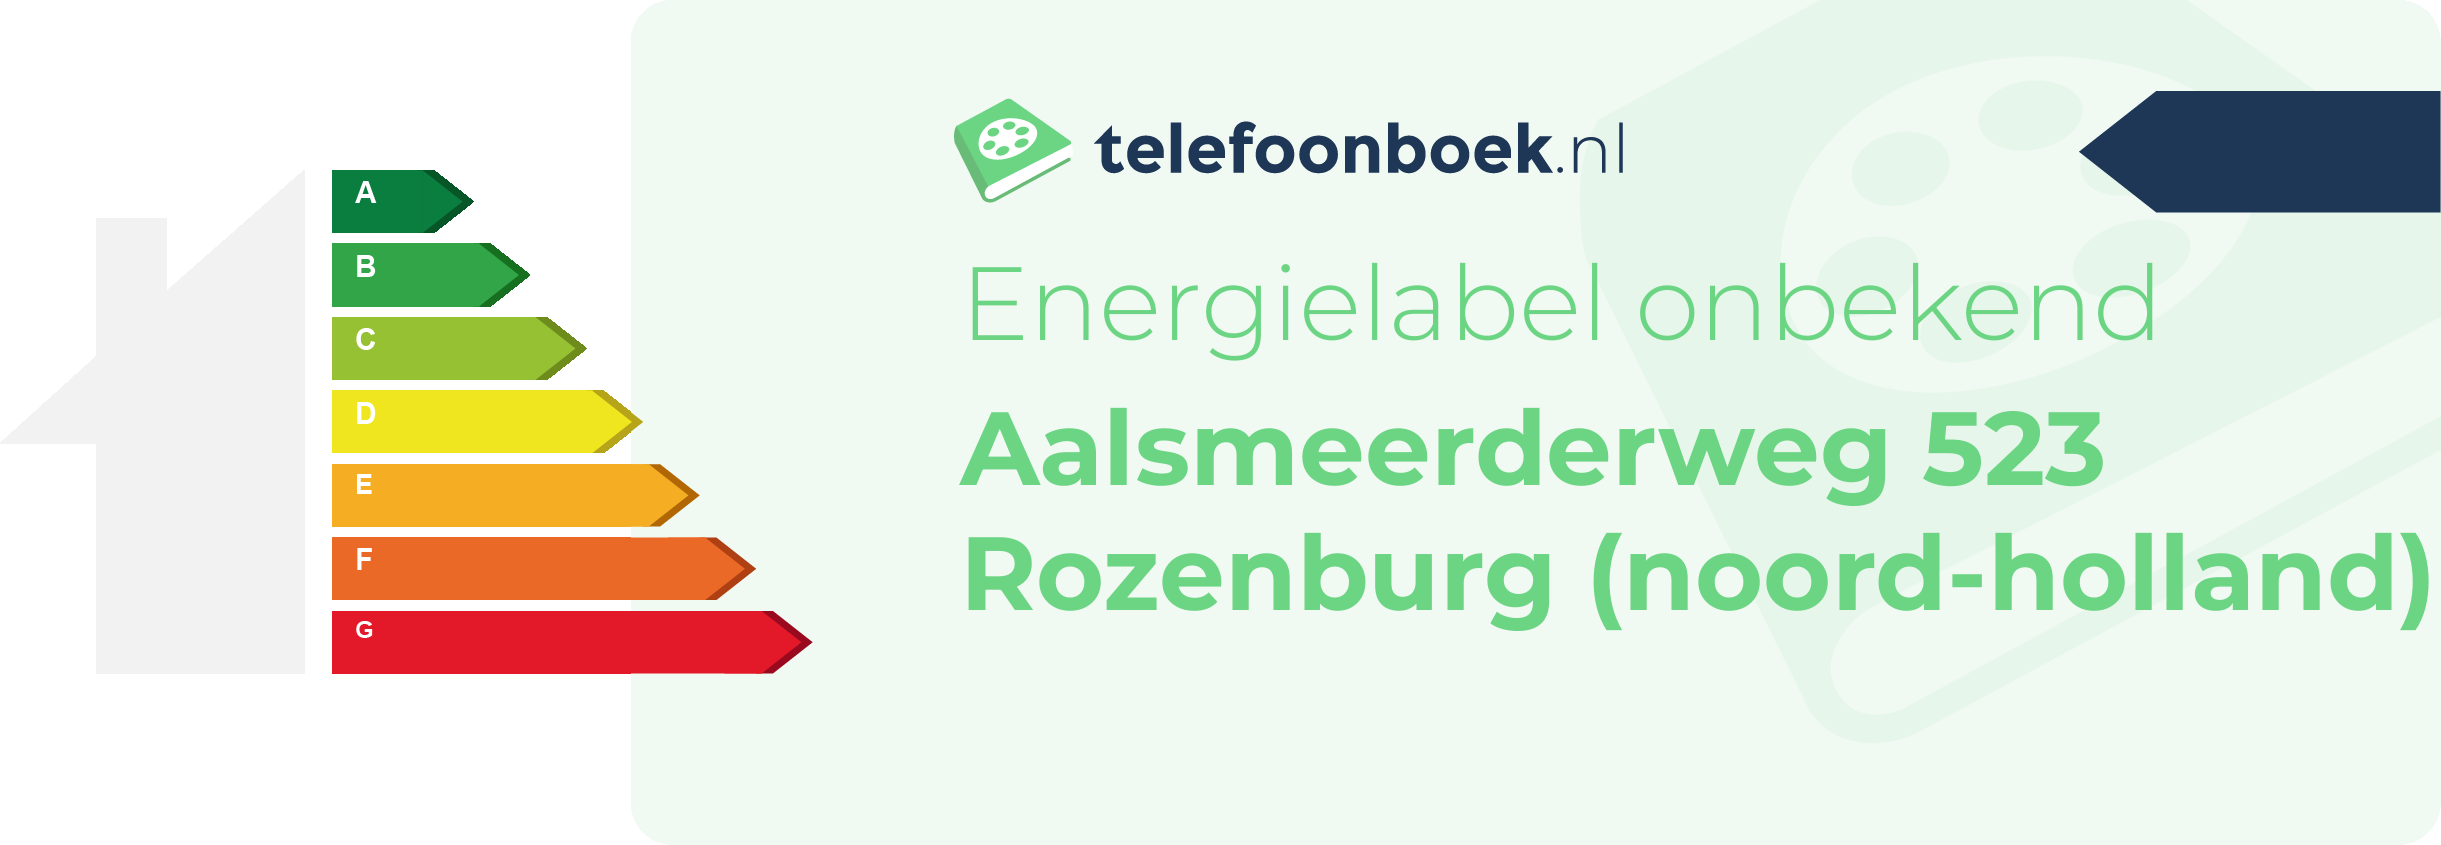 Energielabel Aalsmeerderweg 523 Rozenburg (Noord-Holland)